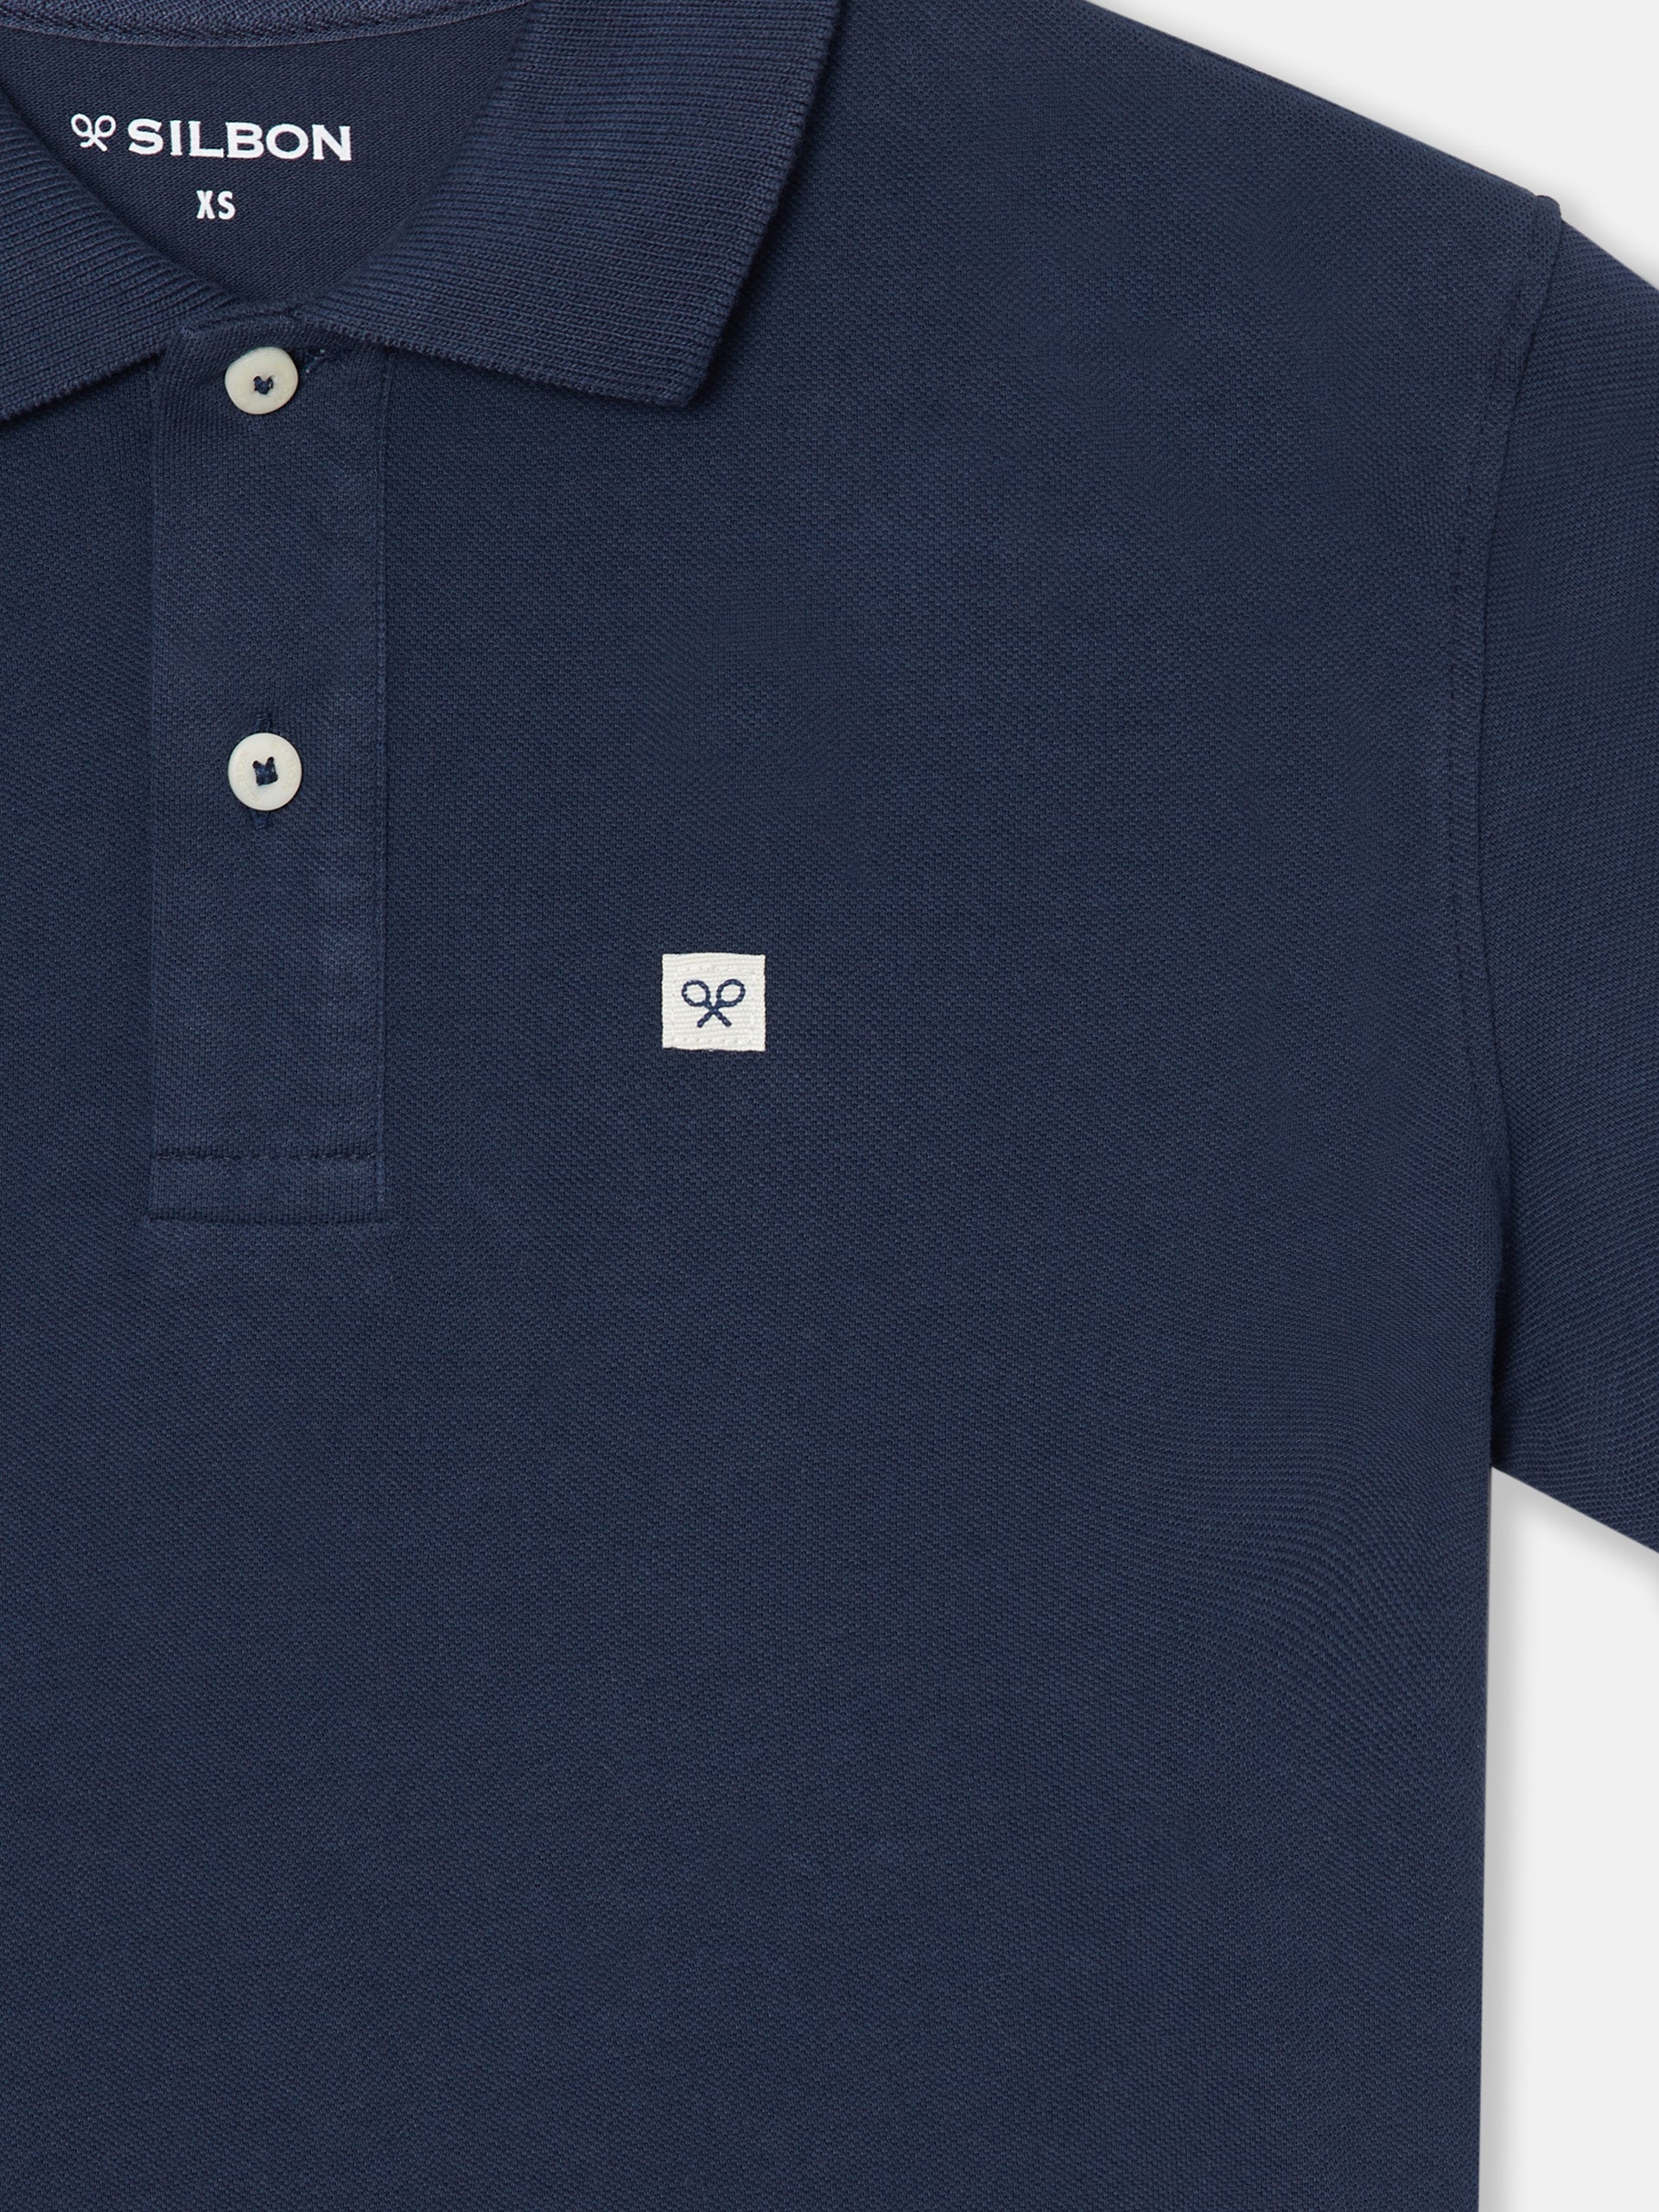 Navy blue mini patch polo shirt